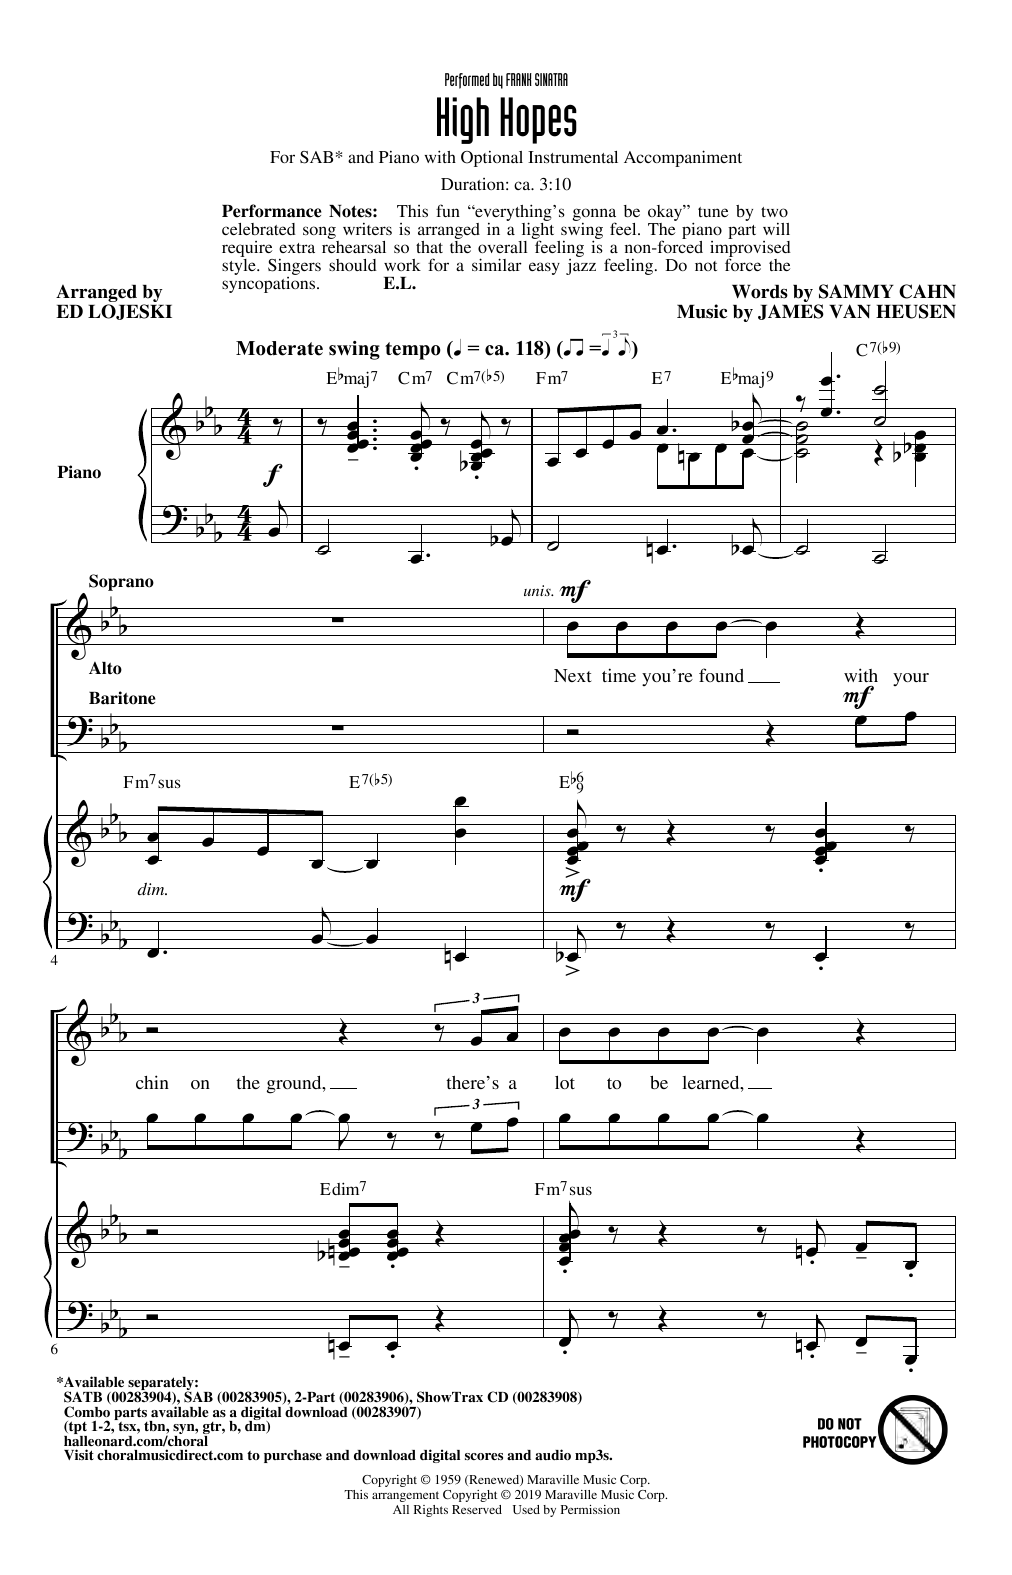 Frank Sinatra High Hopes (arr. Ed Lojeski) Sheet Music Notes & Chords for SAB Choir - Download or Print PDF